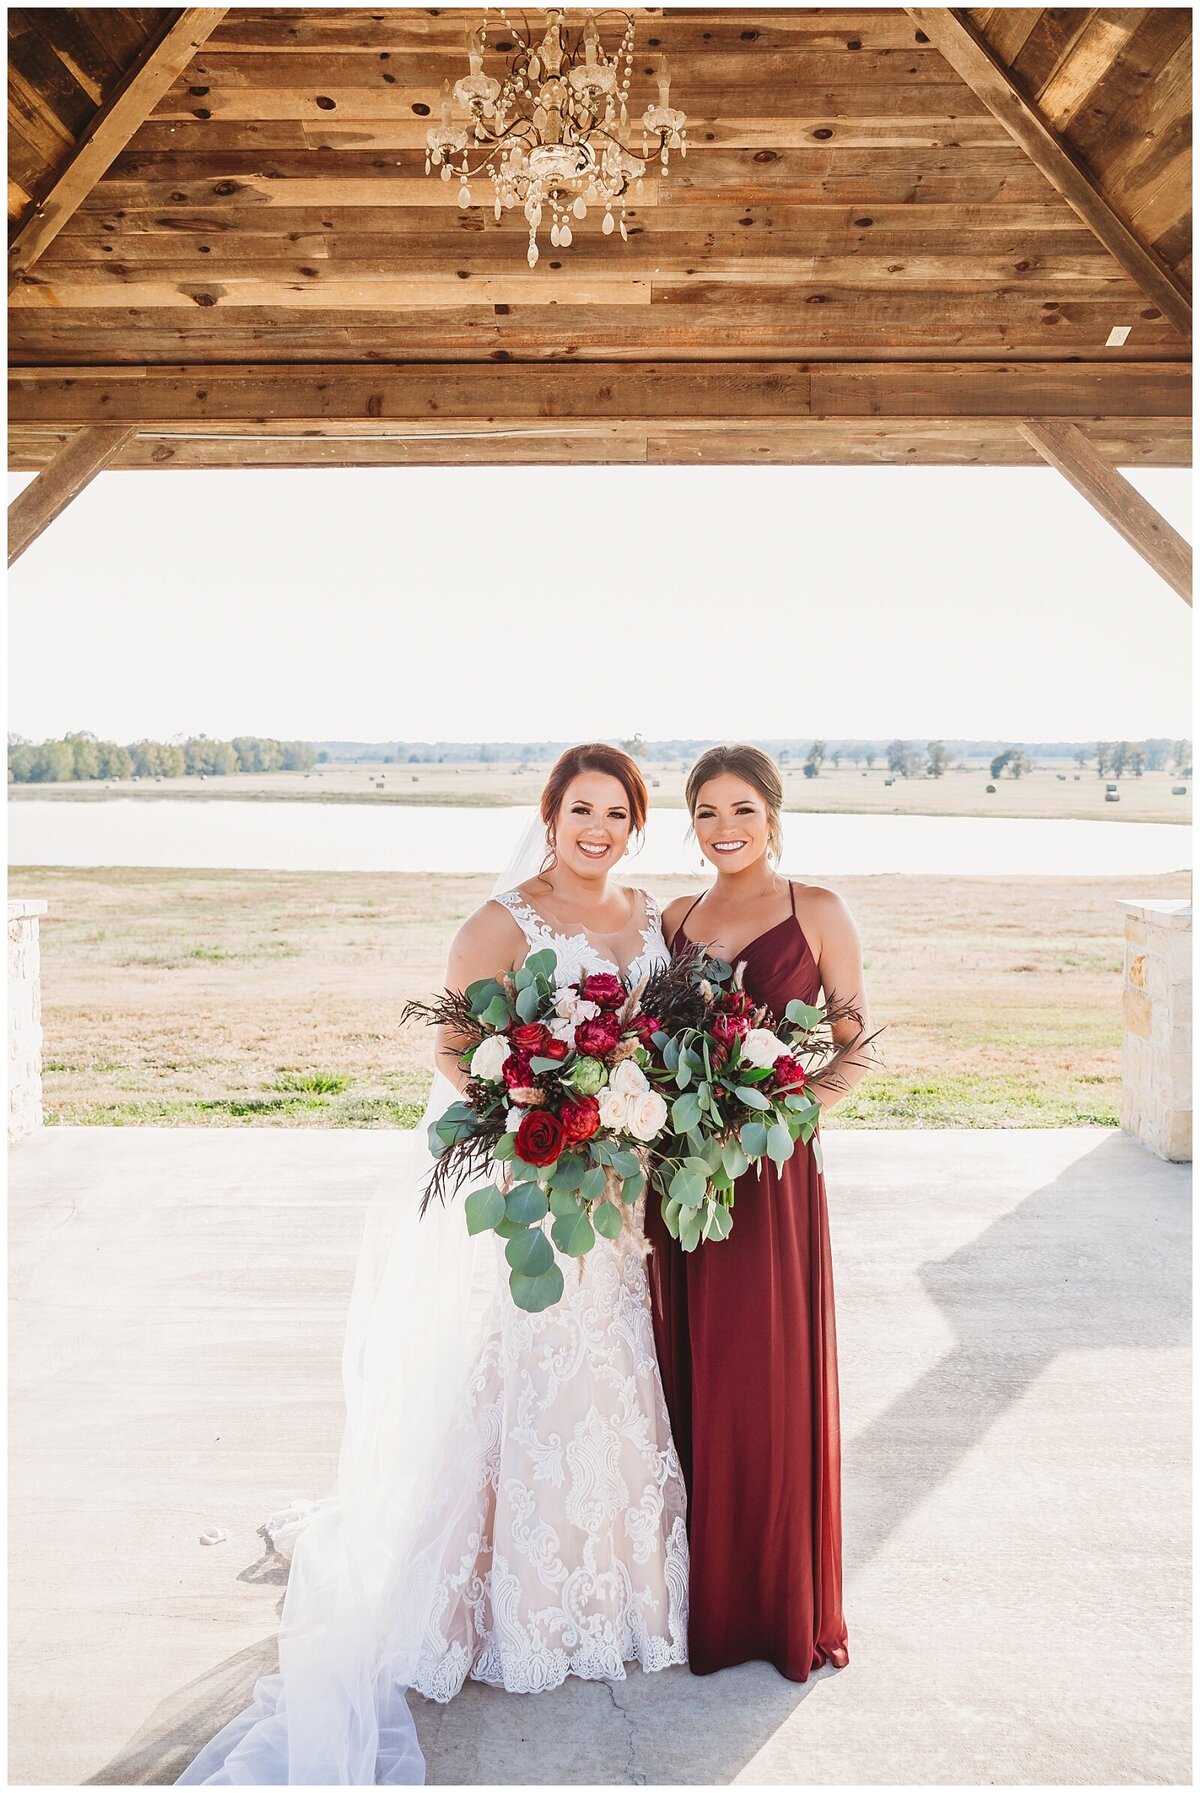 Rustic Burgundy and Blush Indoor Outdoor Wedding at Emery's Buffalo Creek - Houston Wedding Venue_0672